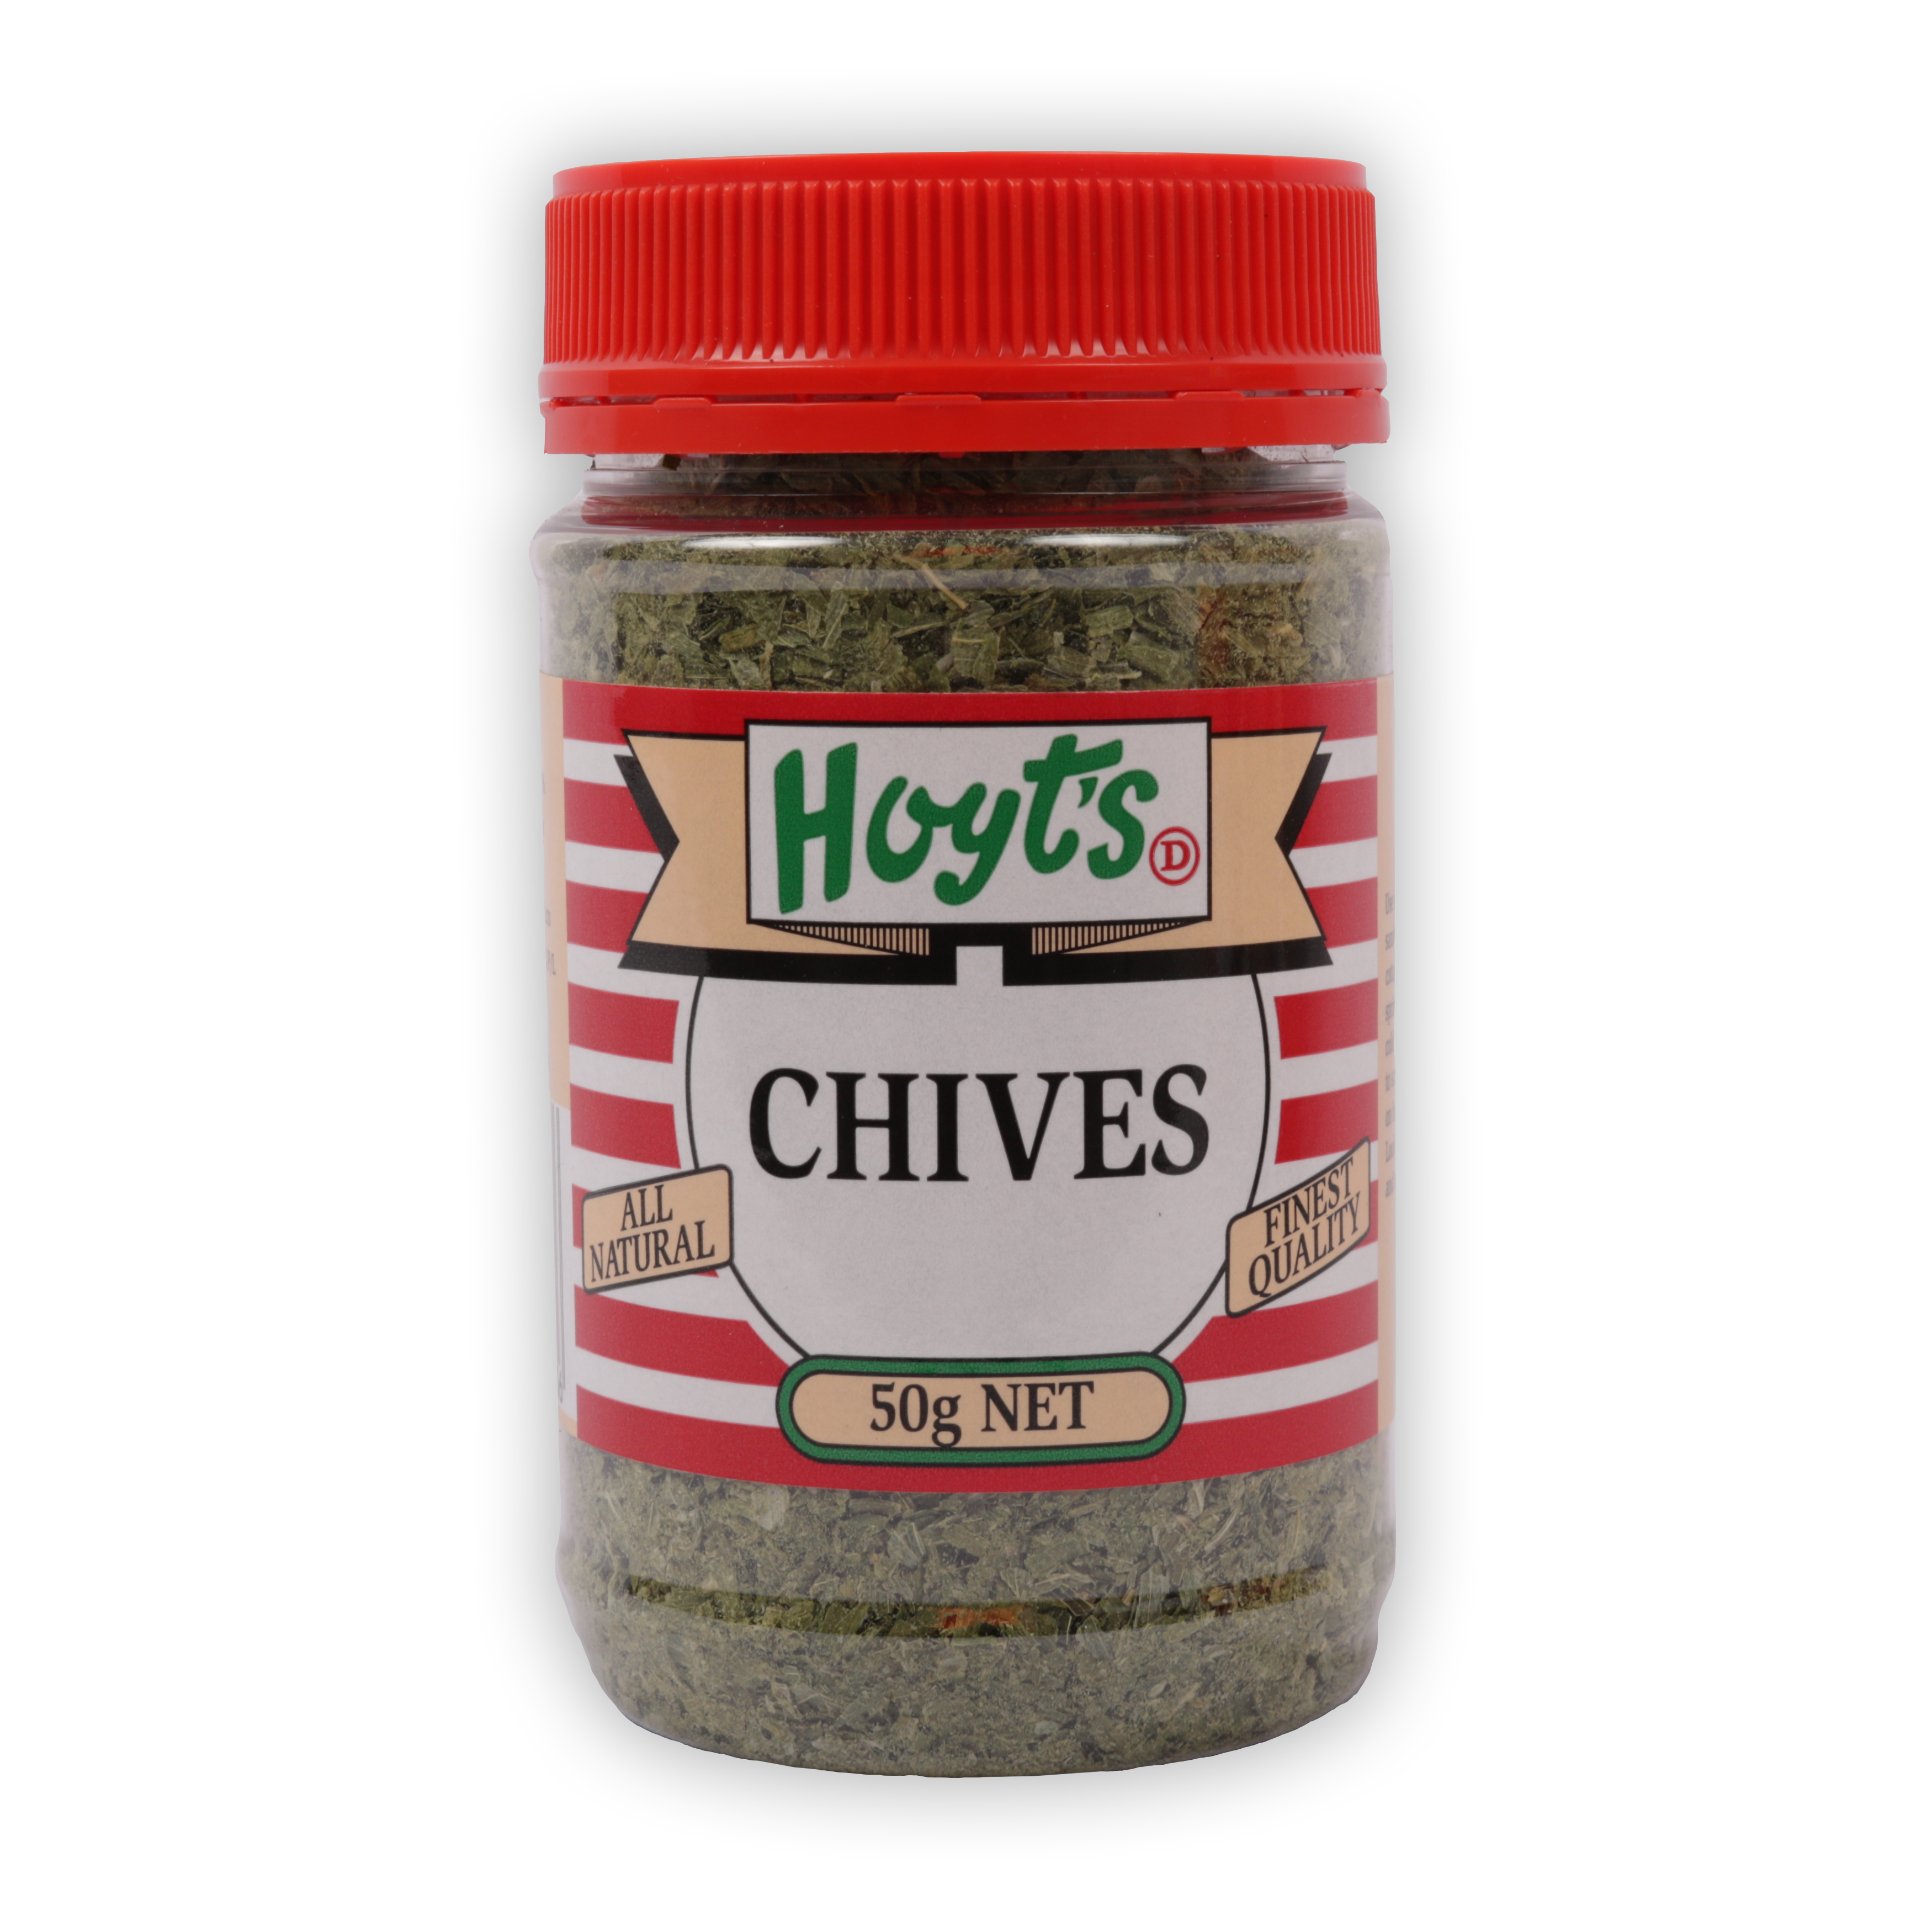 Hoyts Chives 50g